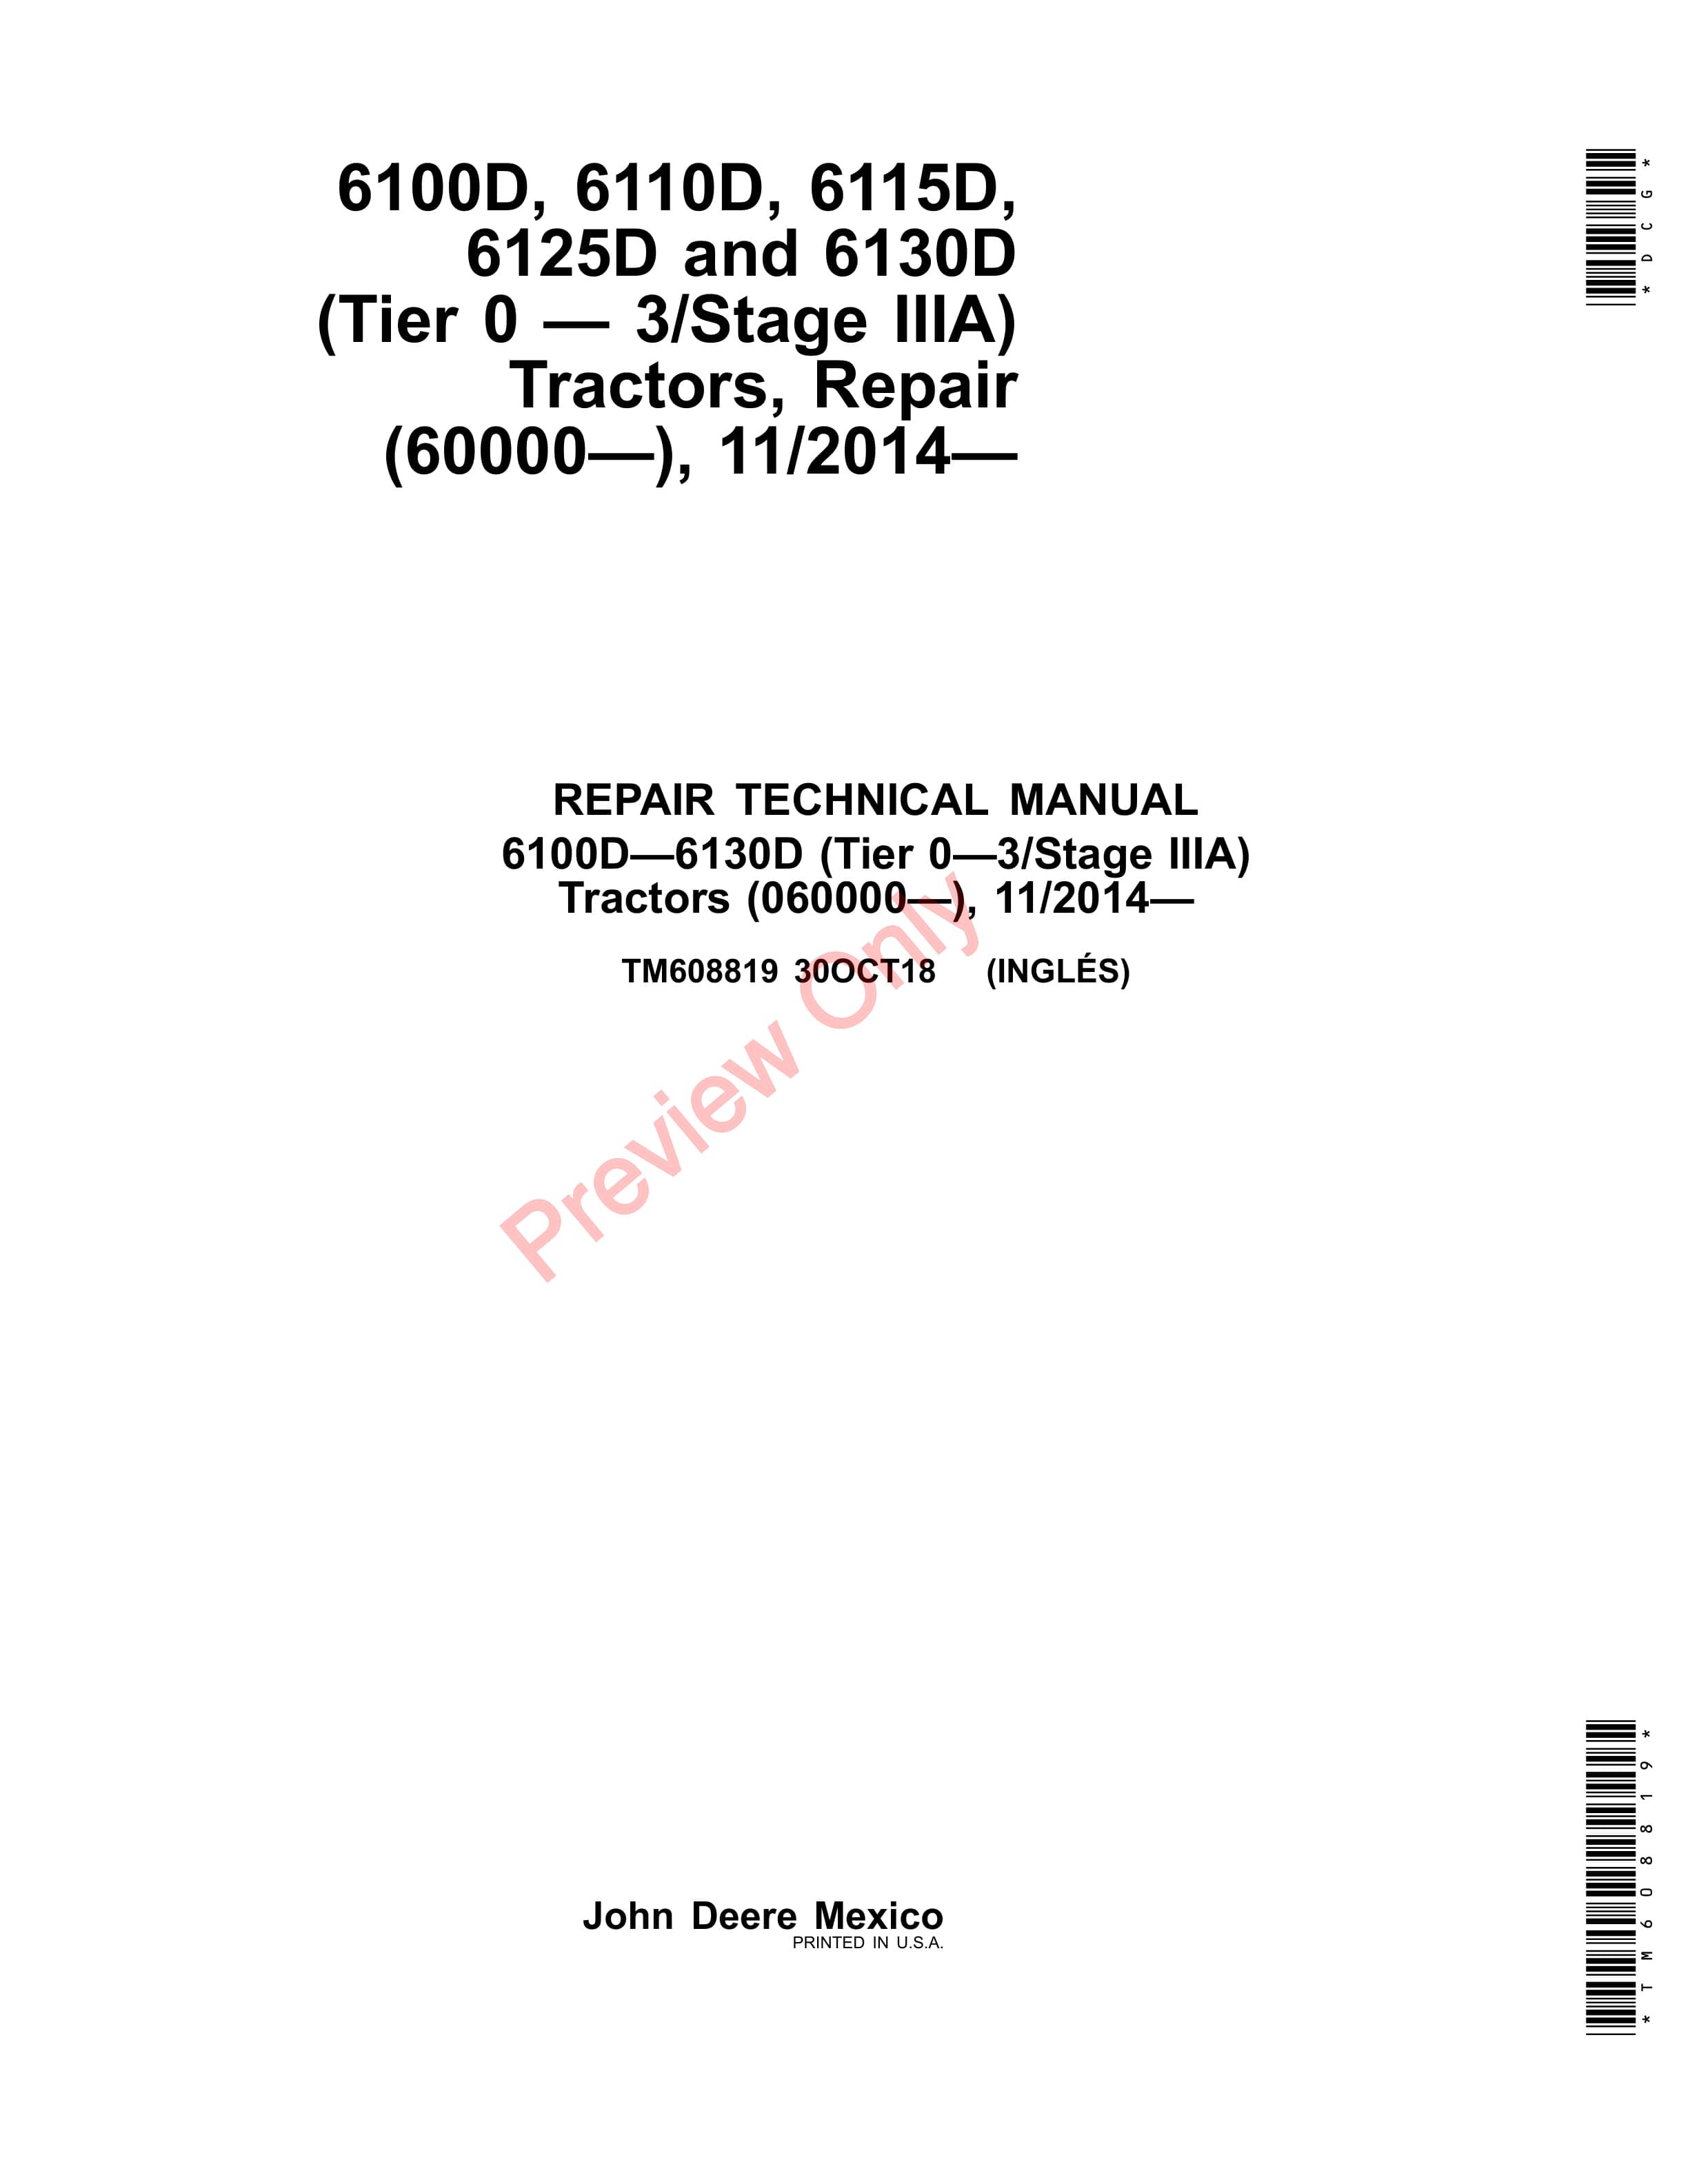 John Deere 6100D 6110D 6115D 6125D and 6130D Tier 0 Repair Technical Manual TM608819 30OCT18 1